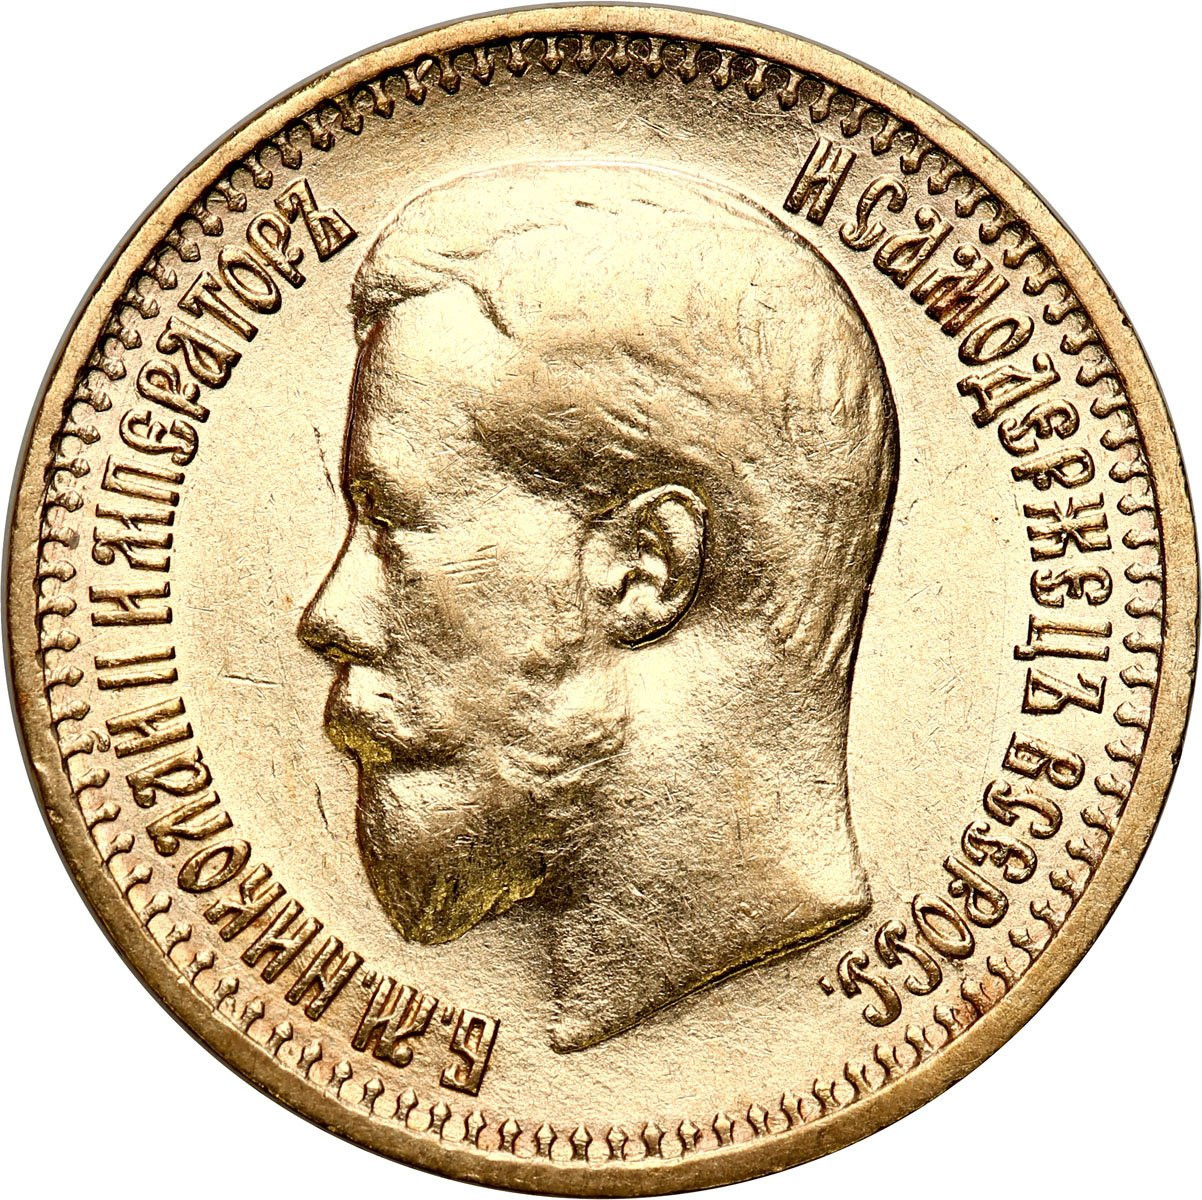 Rosja Mikołaj II 7 rubla 50 kopiejek (7,5 Rubla) 1897 AГ, Petersburg RZADKOŚĆ